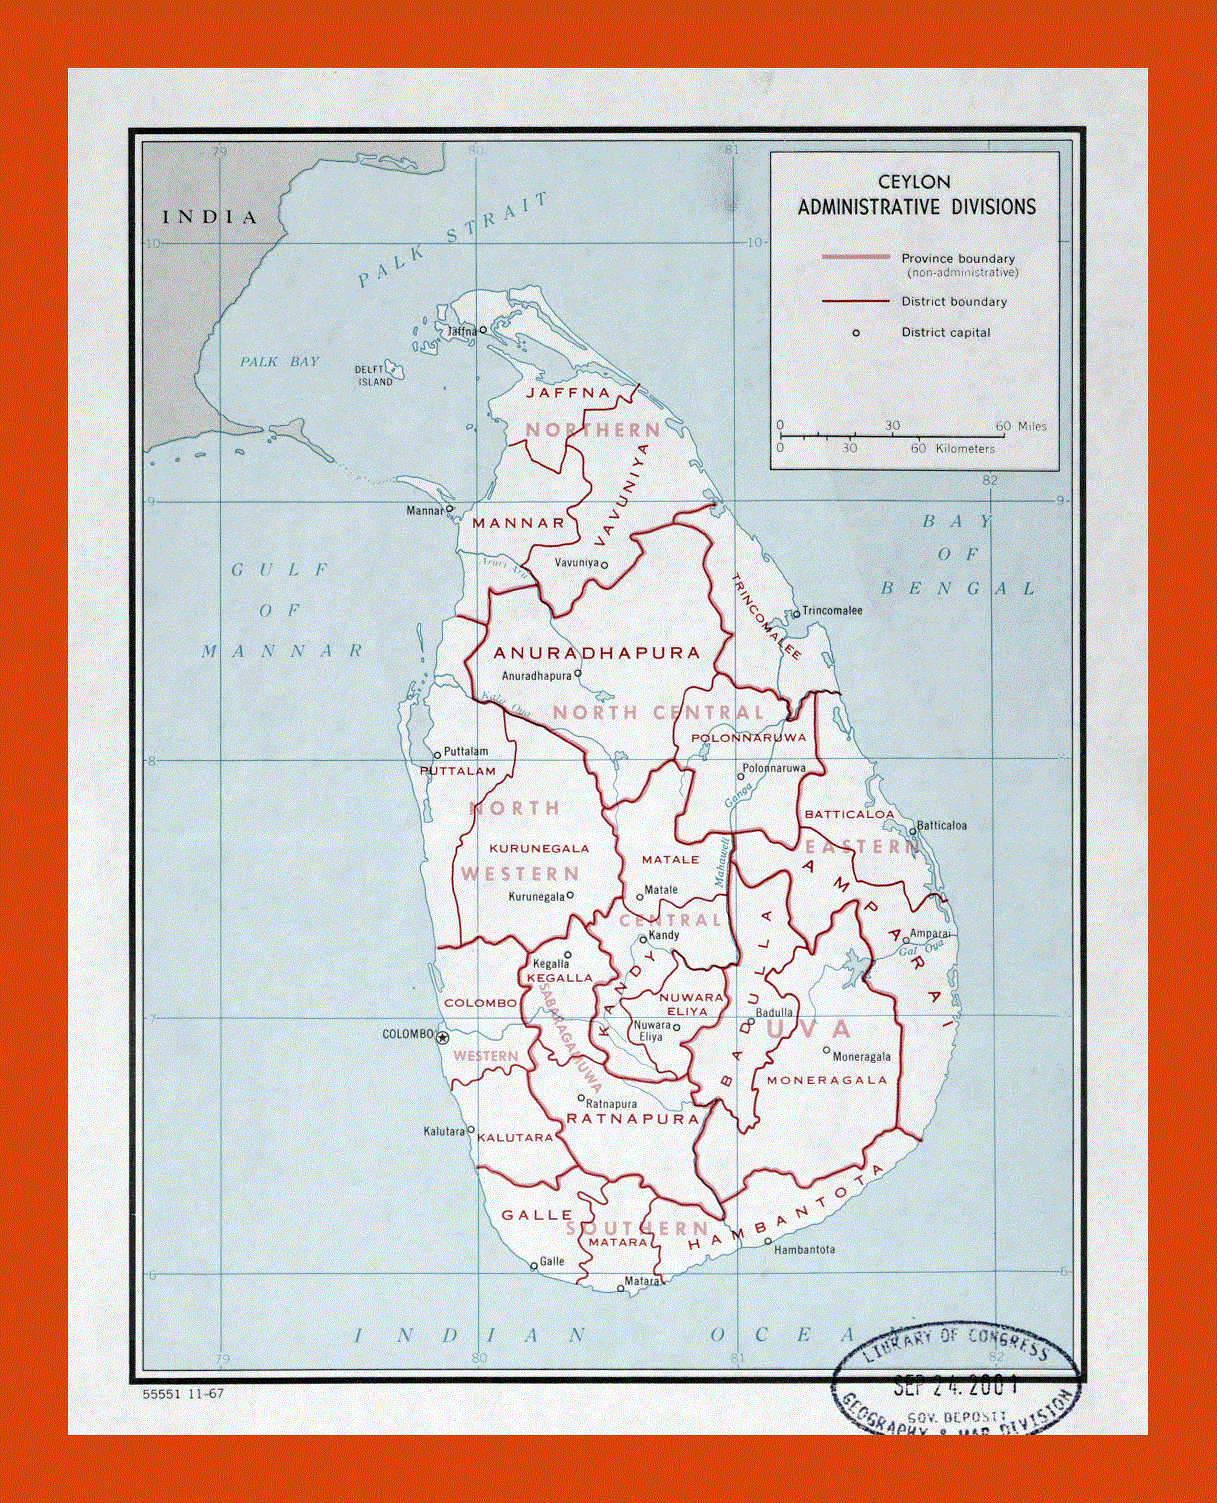 Administrative divisions map of Sri Lanka (Ceylon) - 1967